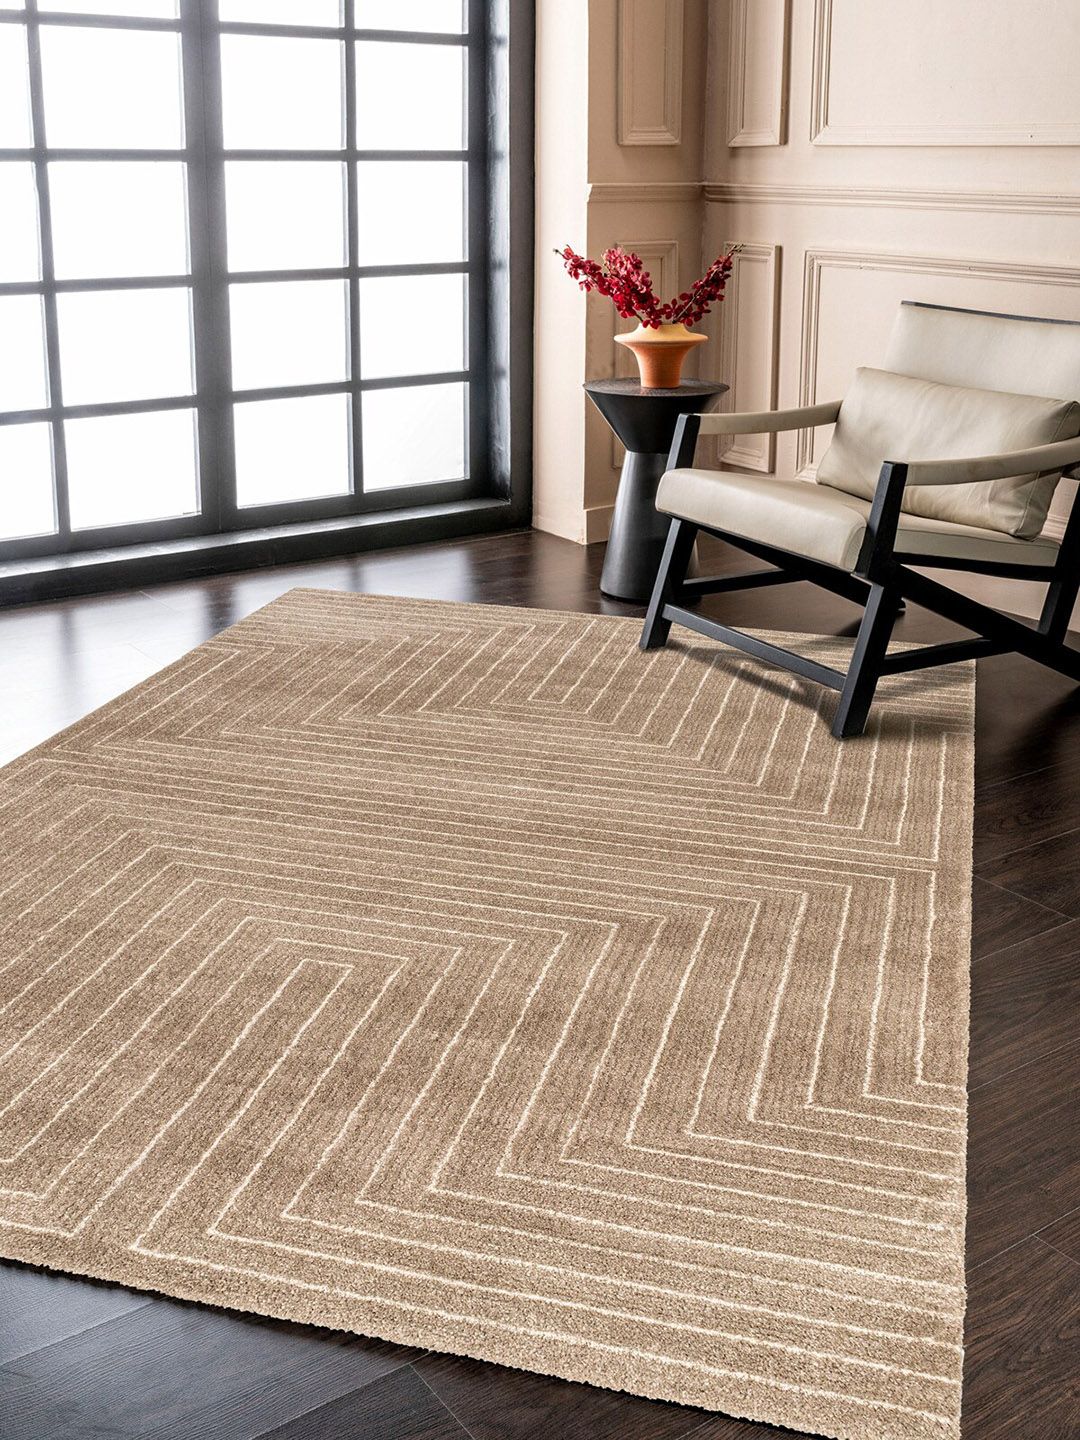 DDecor Taupe Geometric Carpet Price in India